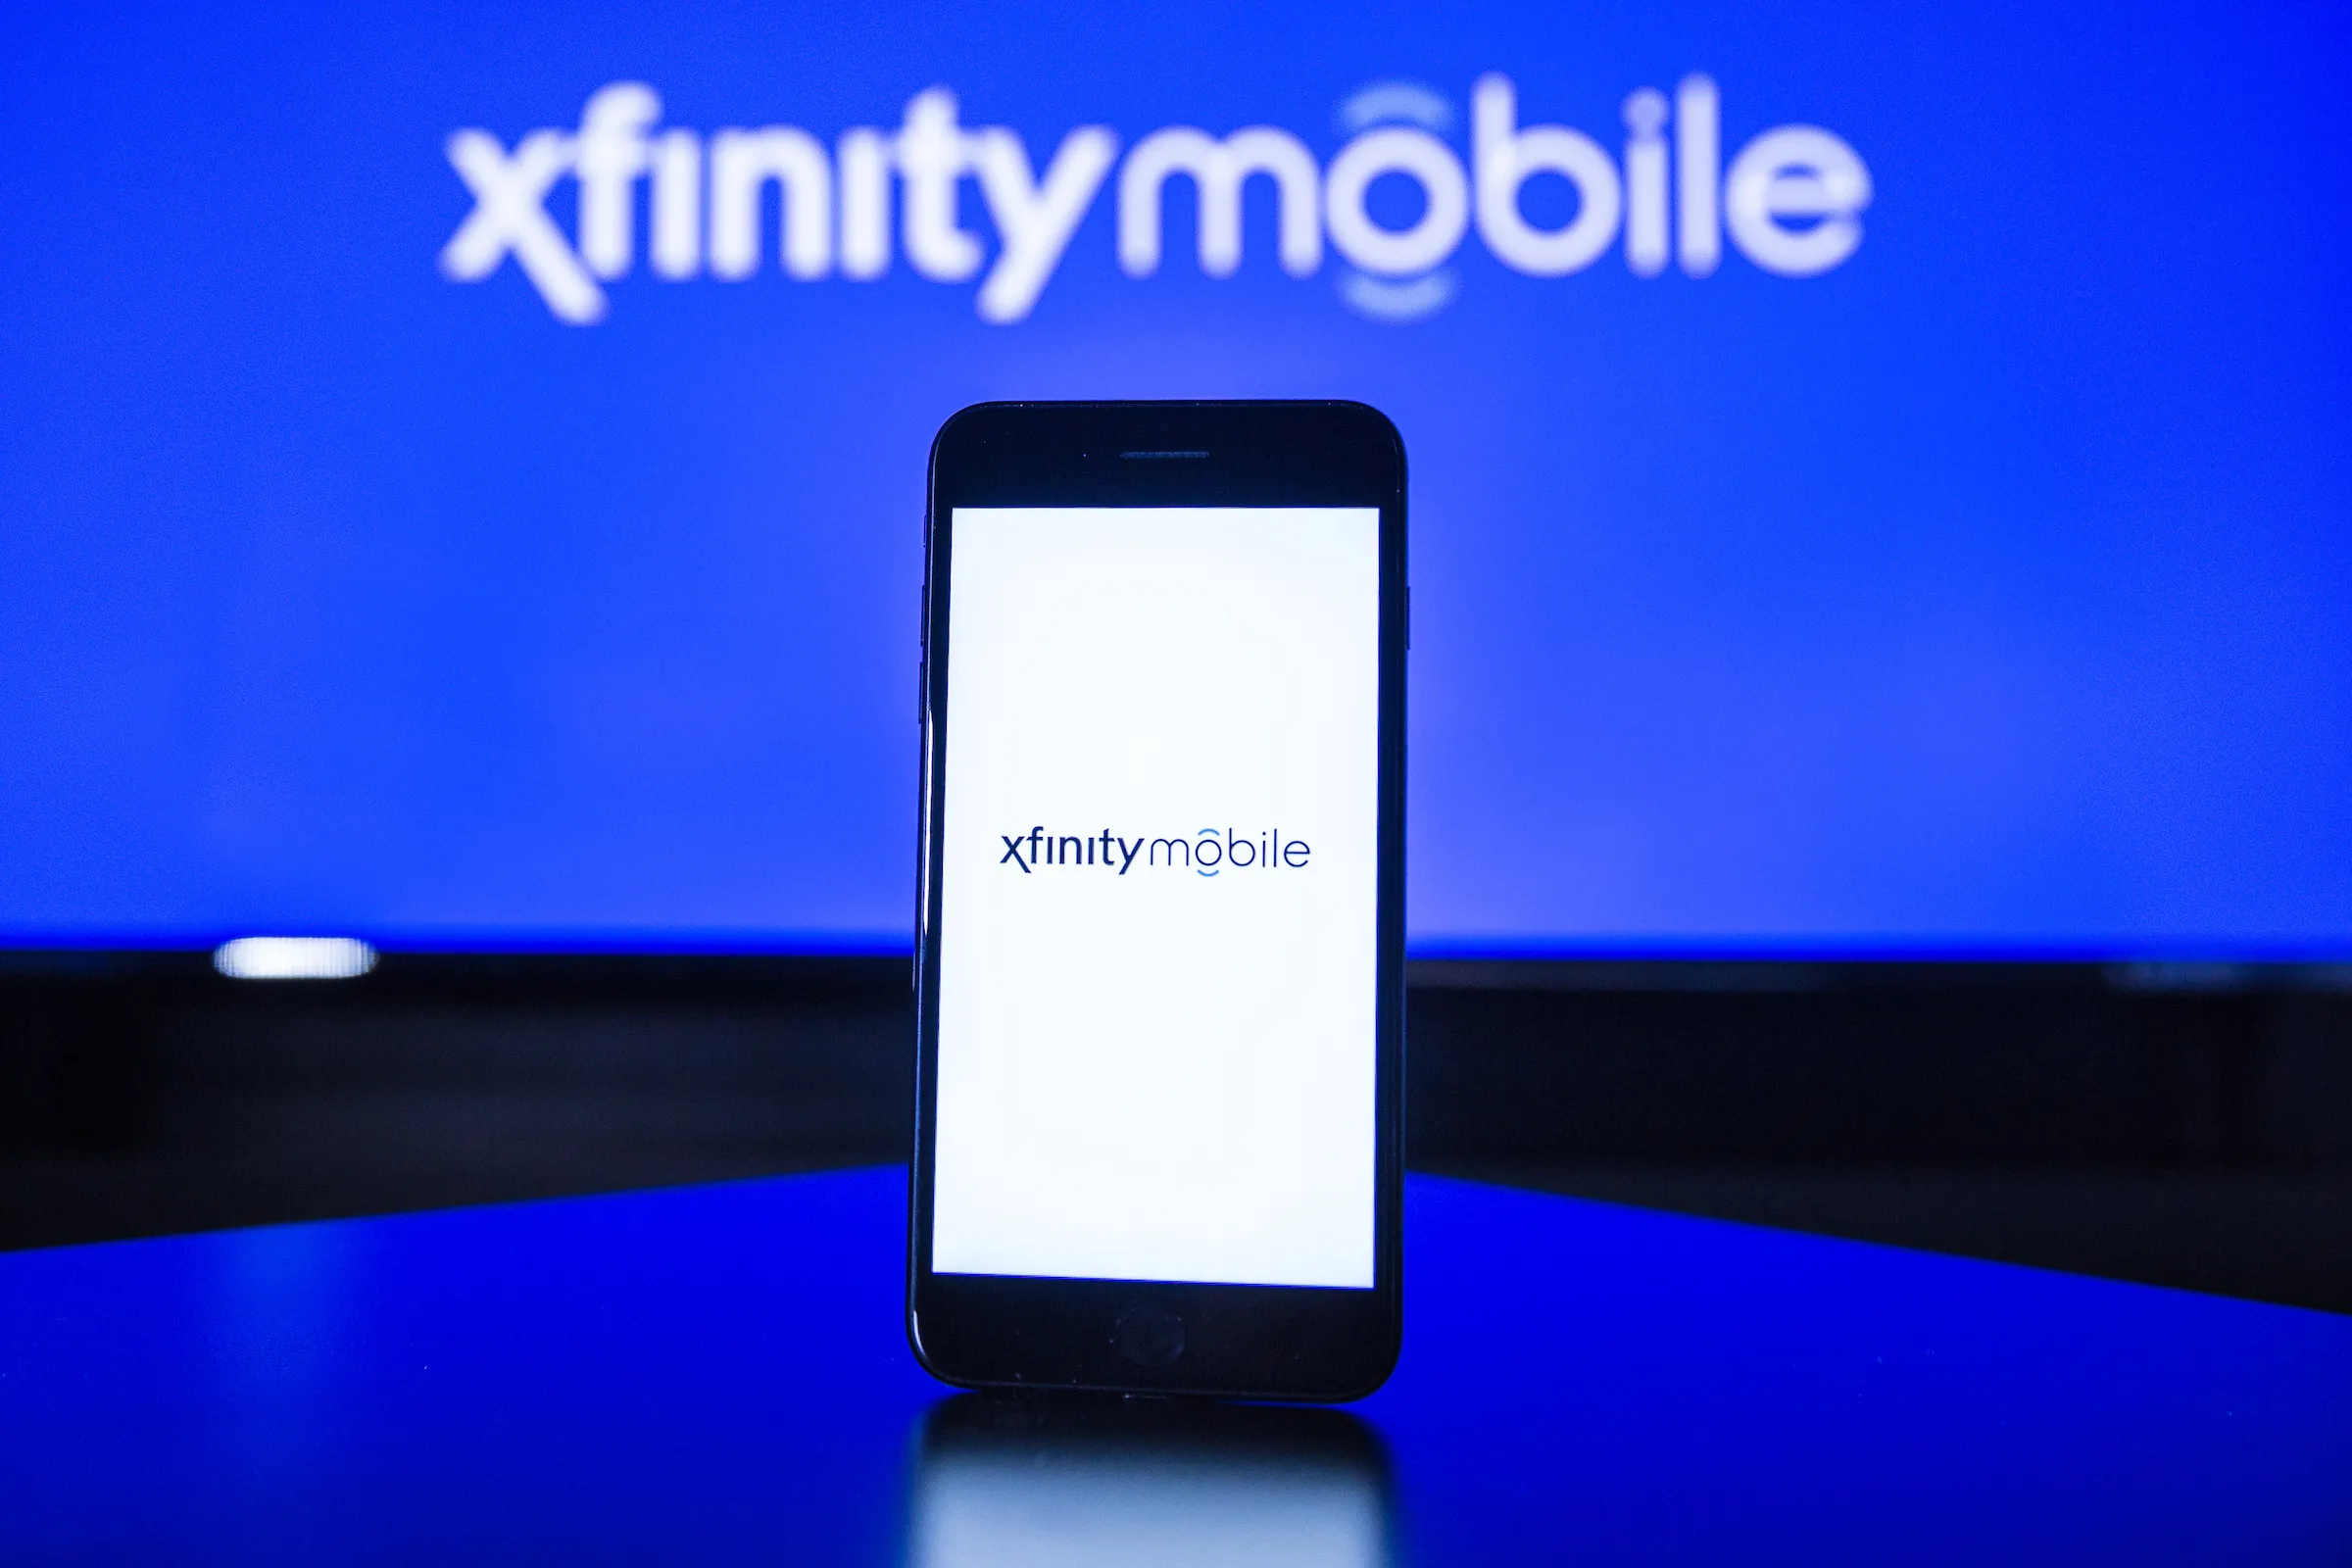 how-to-unlock-iphone-xfinity-mobile